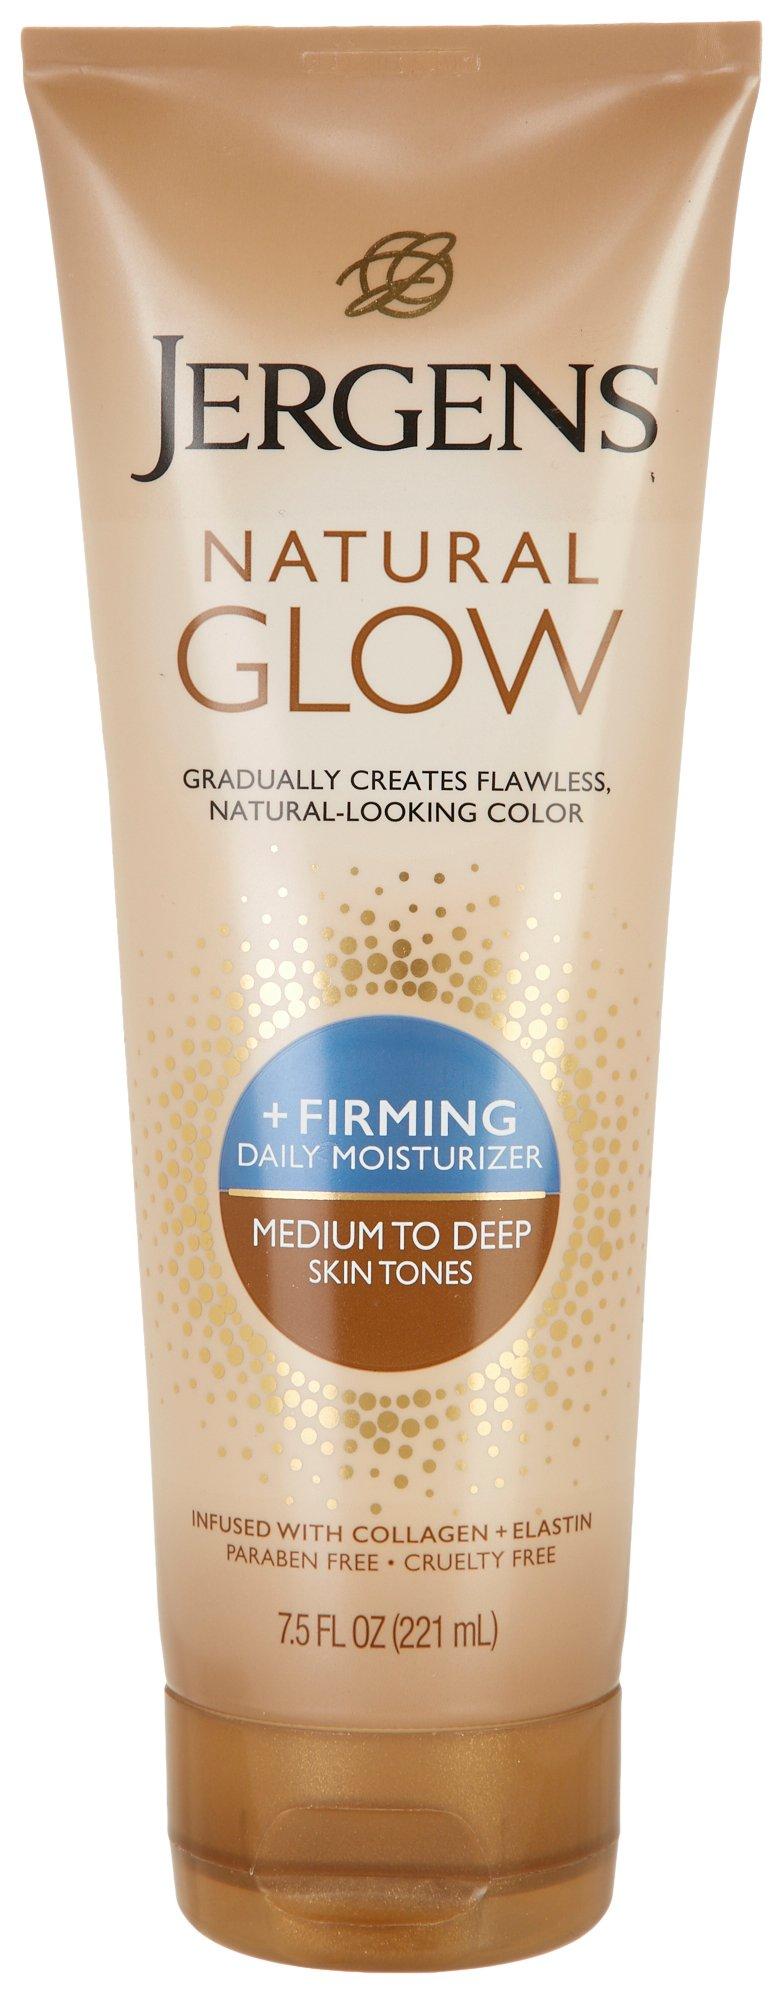 Medium to Deep Natural Glow Face Tanner 7.5 fl.oz.